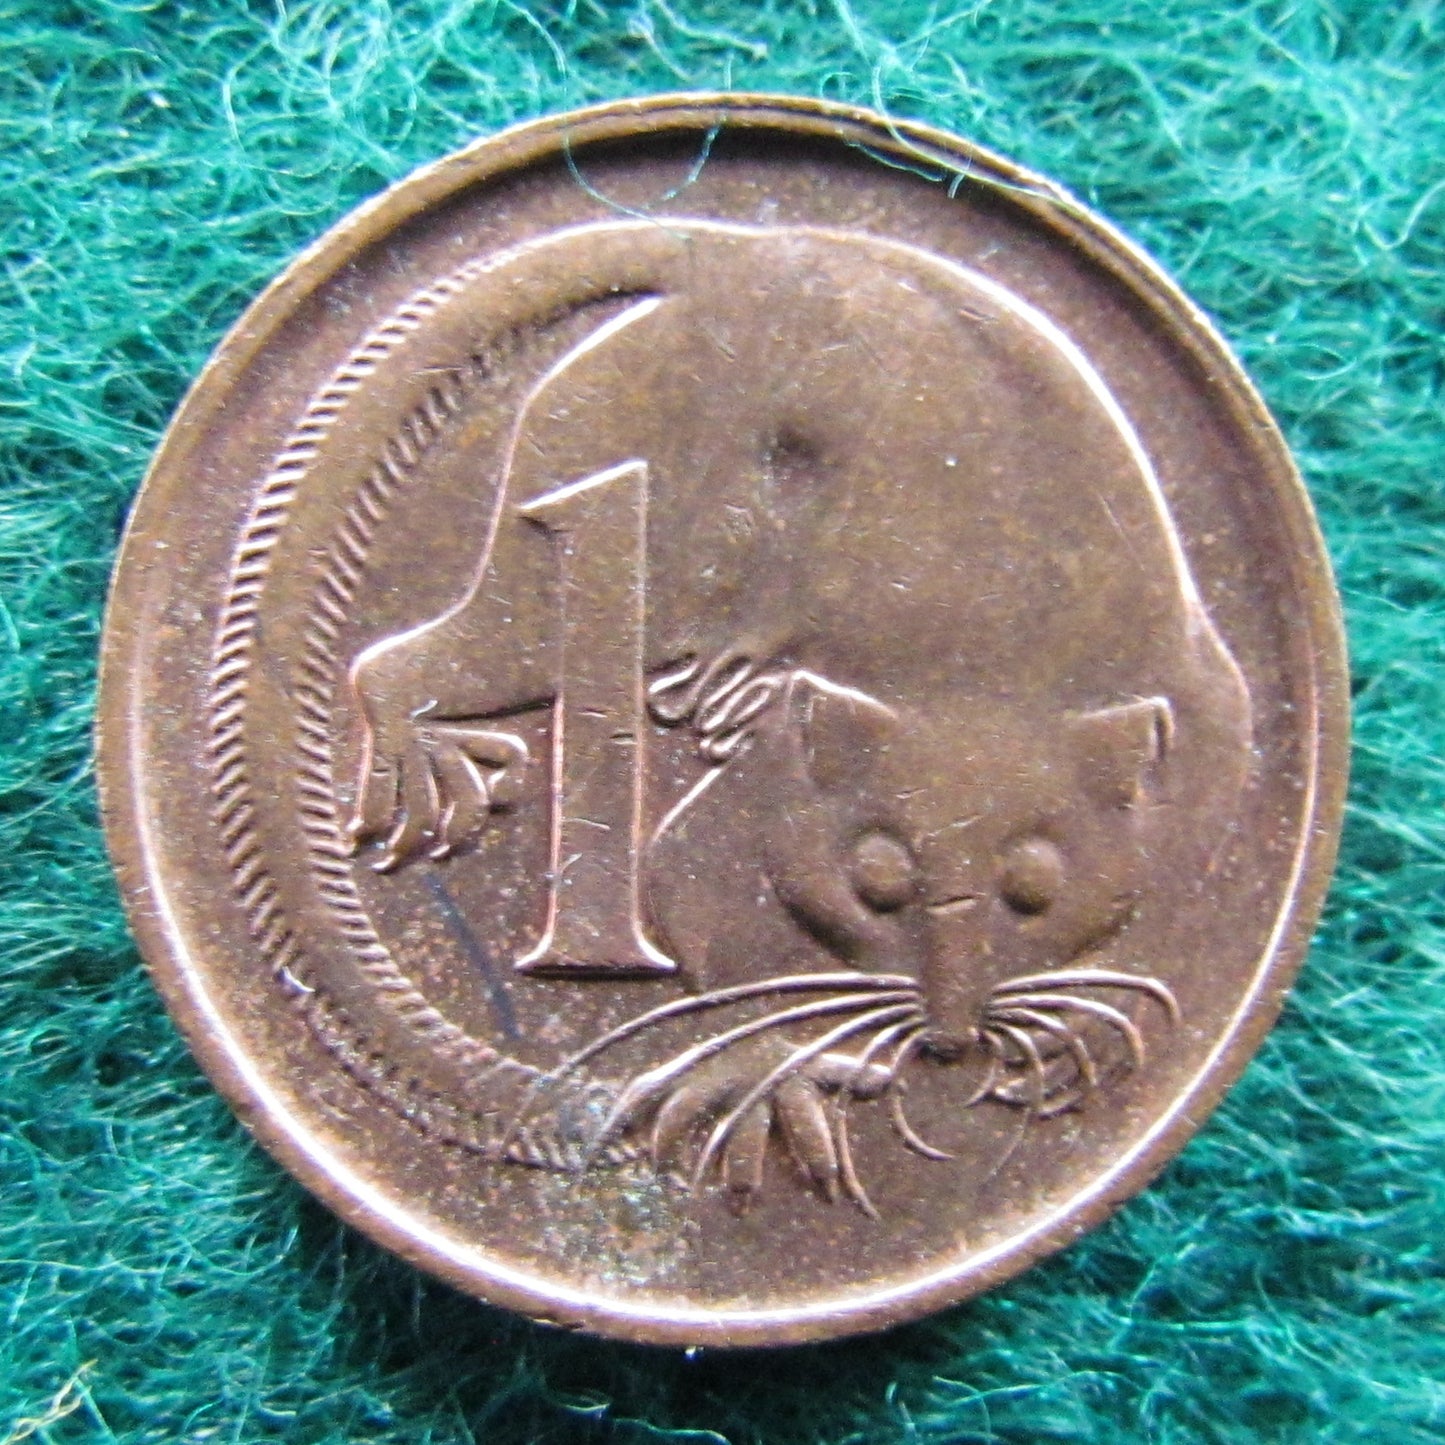 Australian 1984 1 Cent Queen Elizabeth Coin